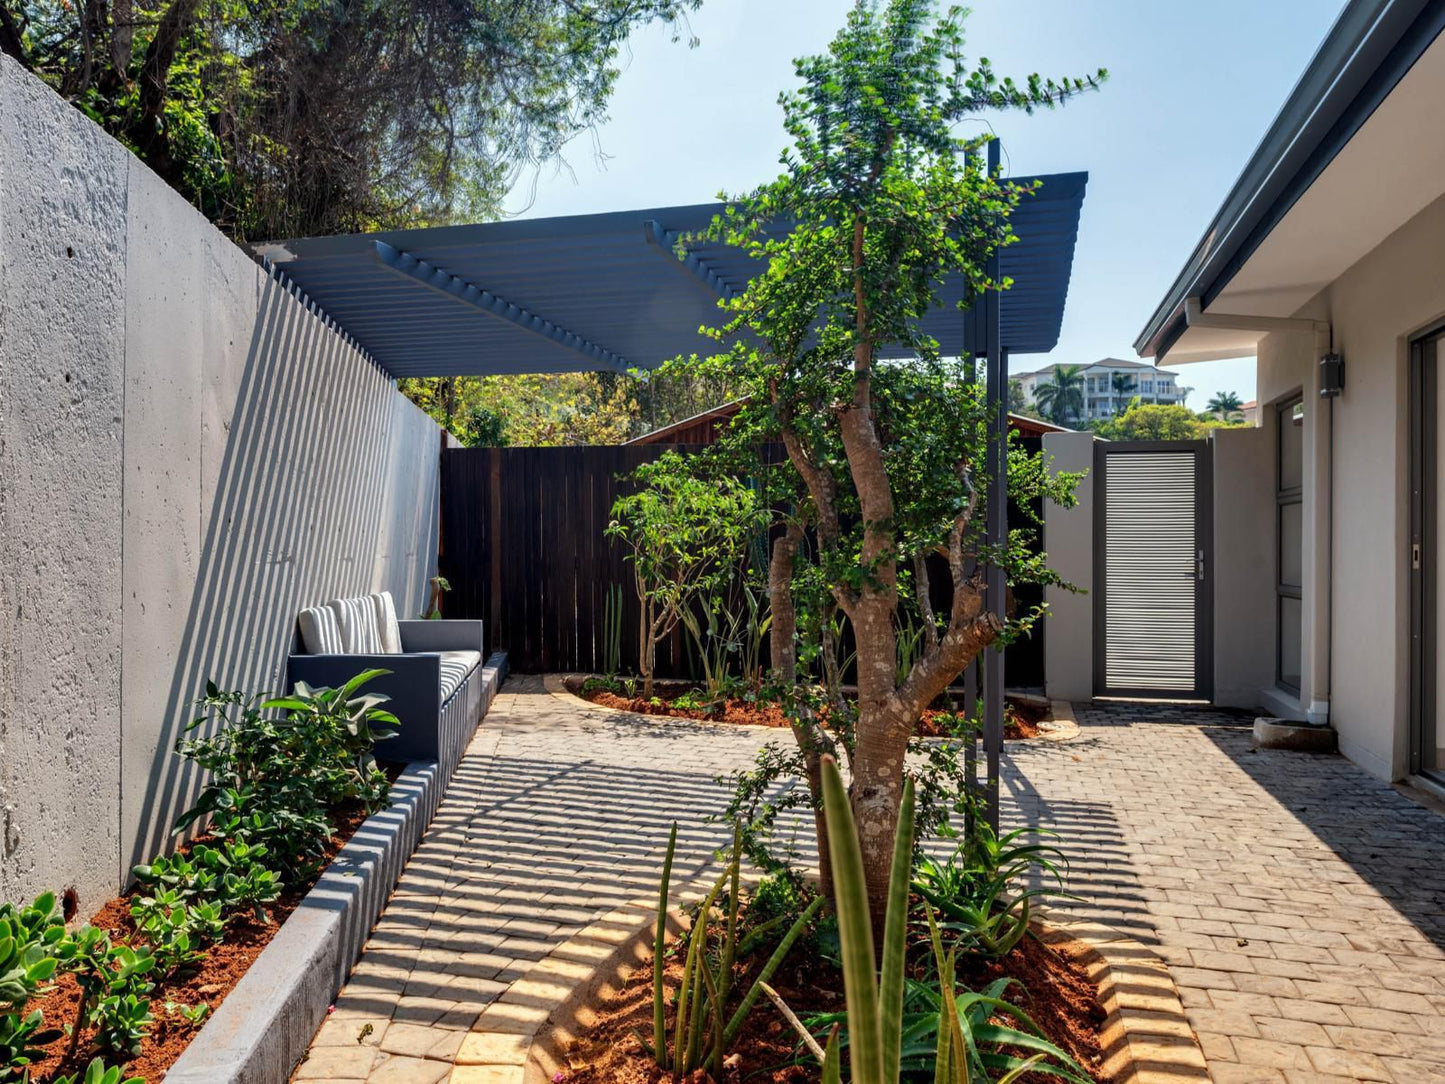 5 On Lindsay Ballito Kwazulu Natal South Africa House, Building, Architecture, Garden, Nature, Plant